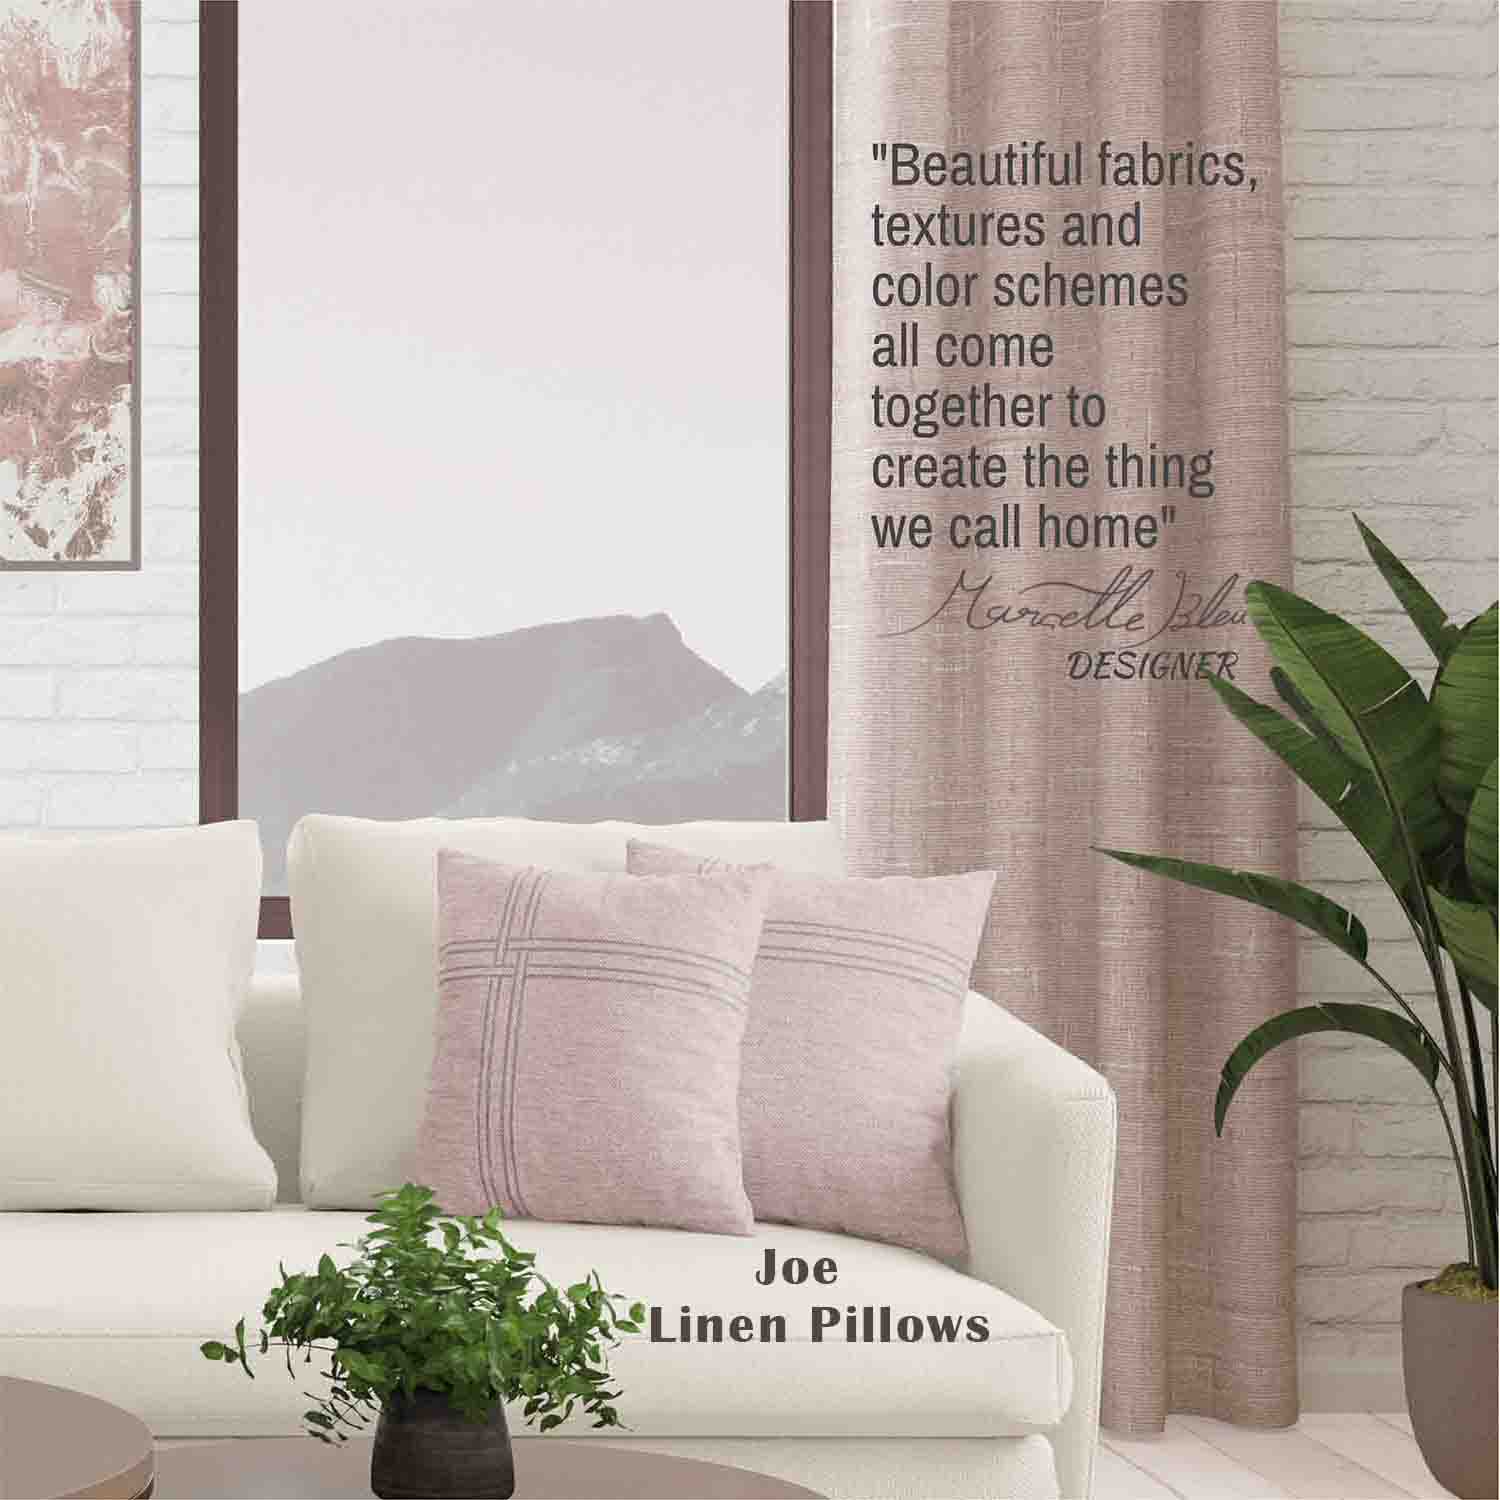 Zara Linen Texture Unlined Light Filtering Curtain Panel (Blackout Available)